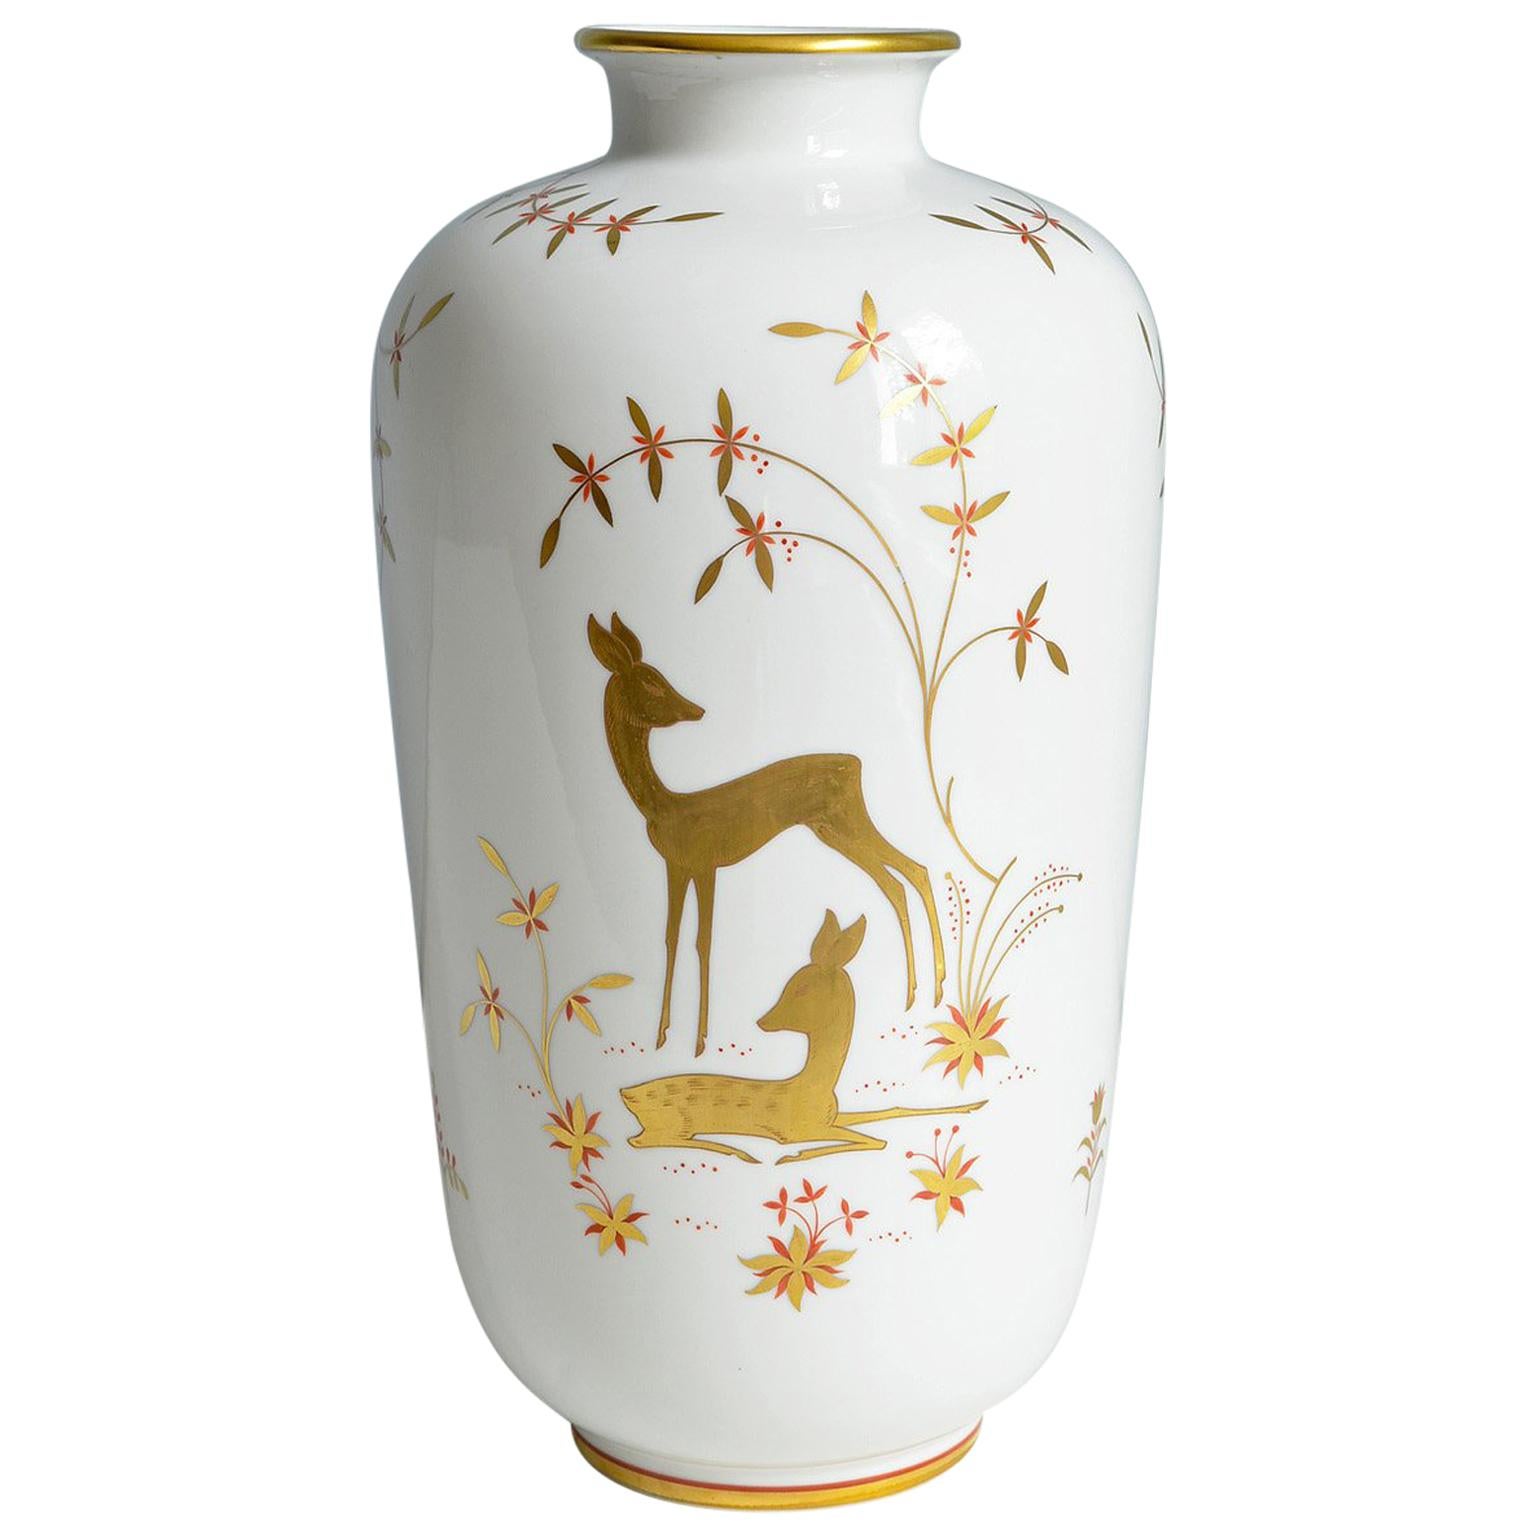 Art Deco Porcelain Vase by Greiner for Heinrich Selb Bavaria Germany Gold/White